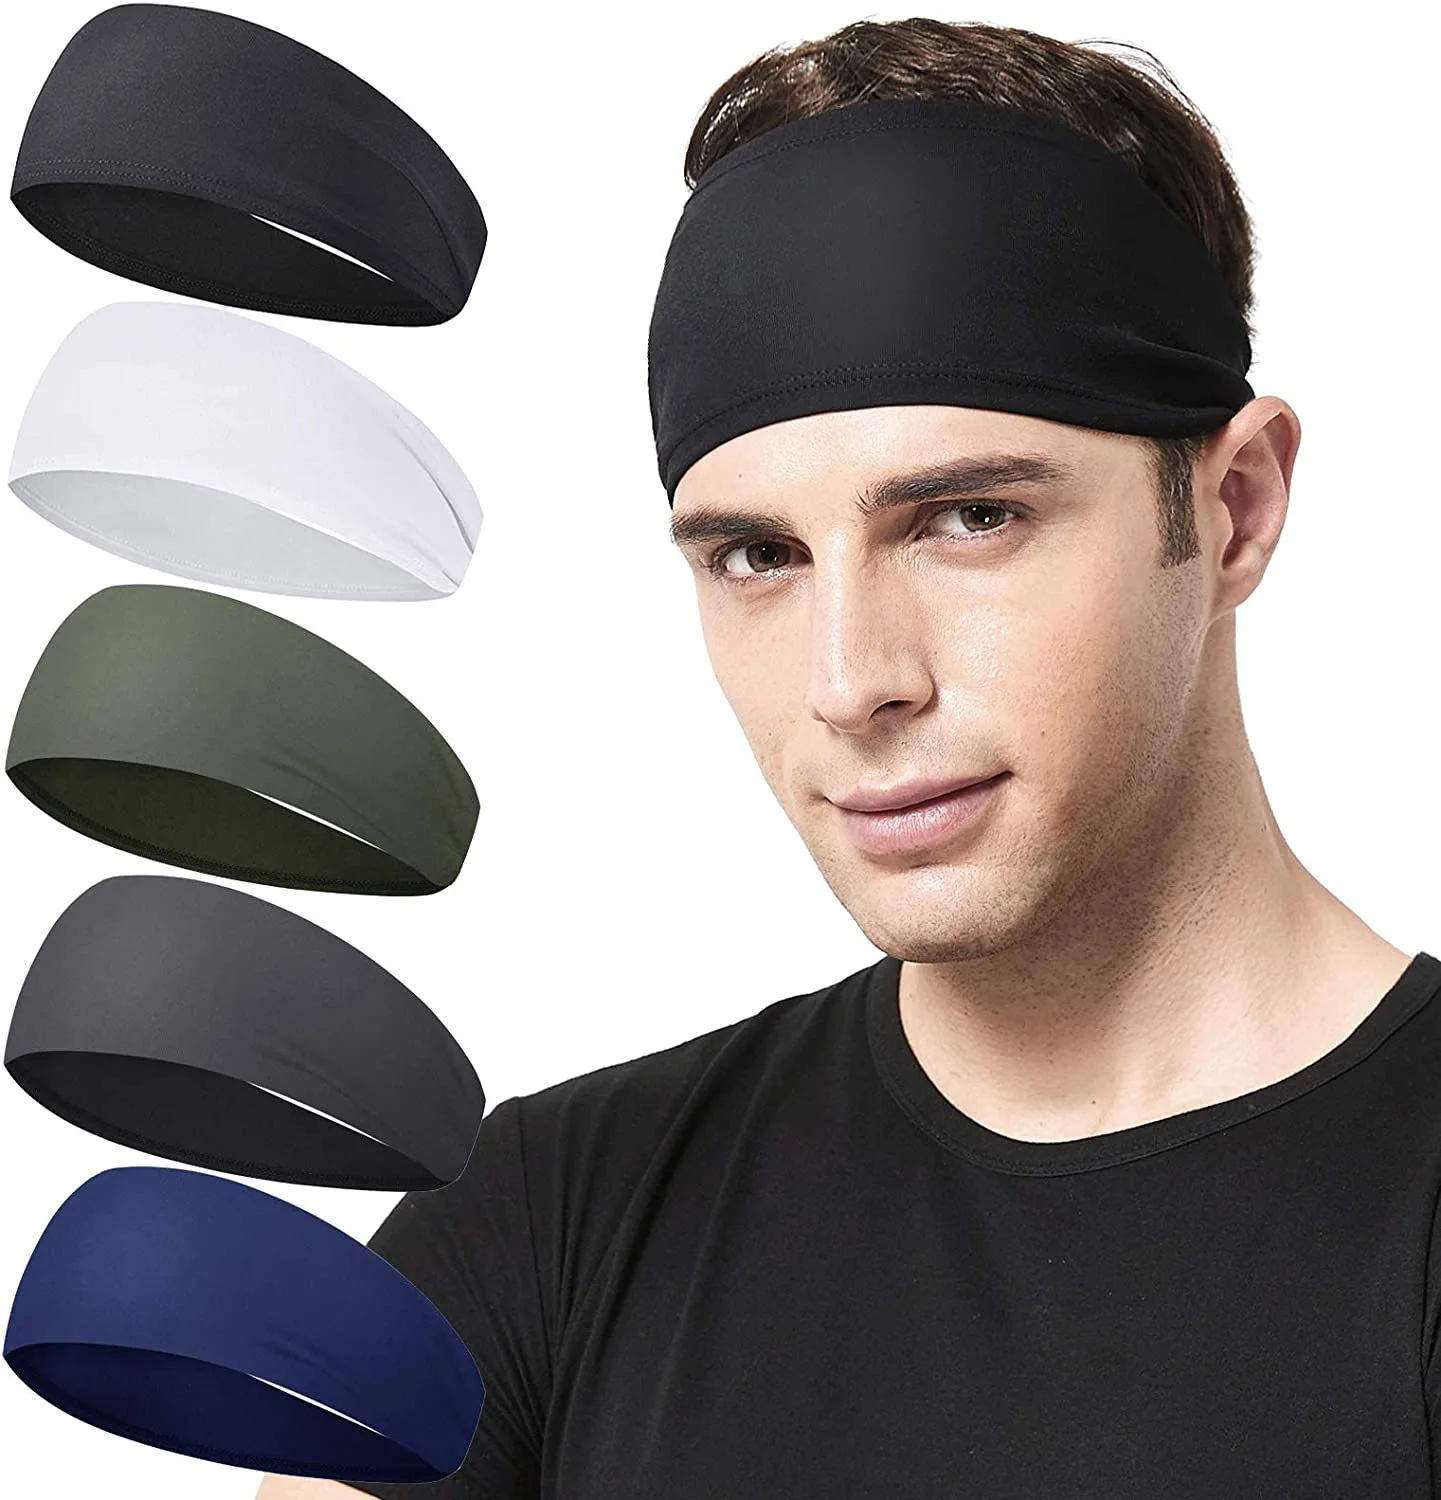 

Sports Headband Fashion Solid Color Outdoor Running Headband Men And Women Cycling Anti Sweat Fast Dry Band Fitness Yoga Headban